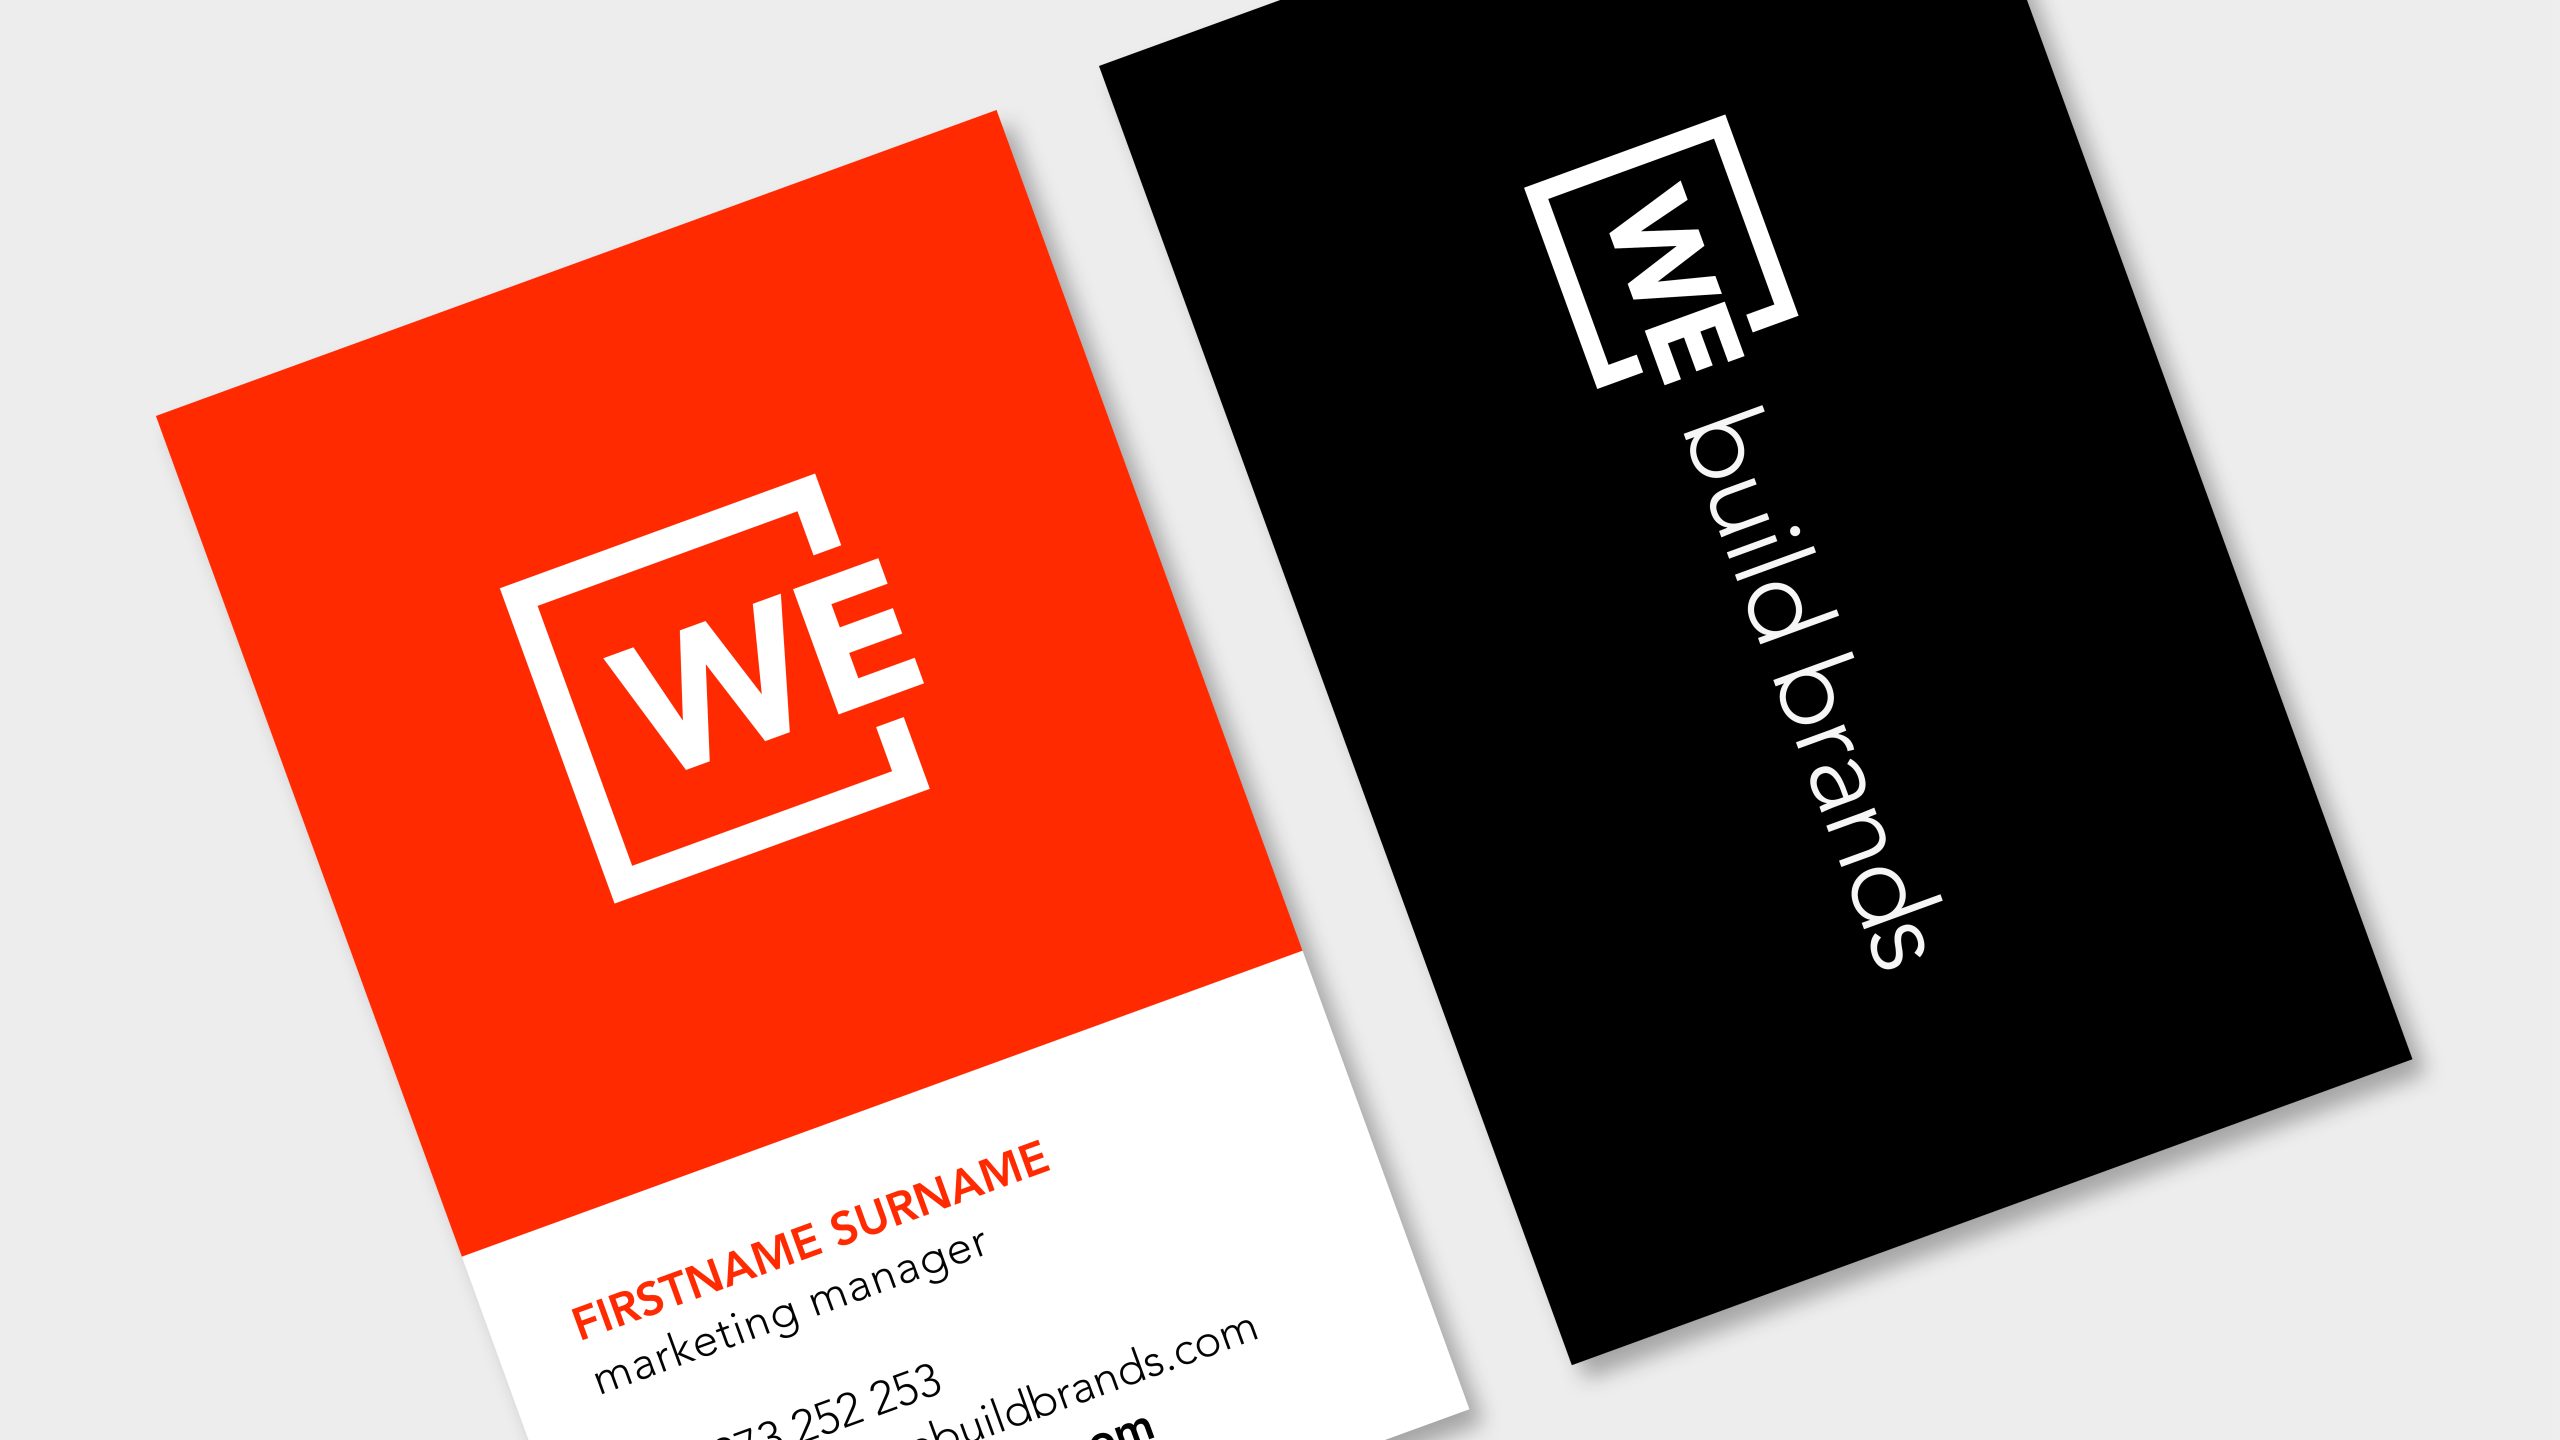 WE business card design